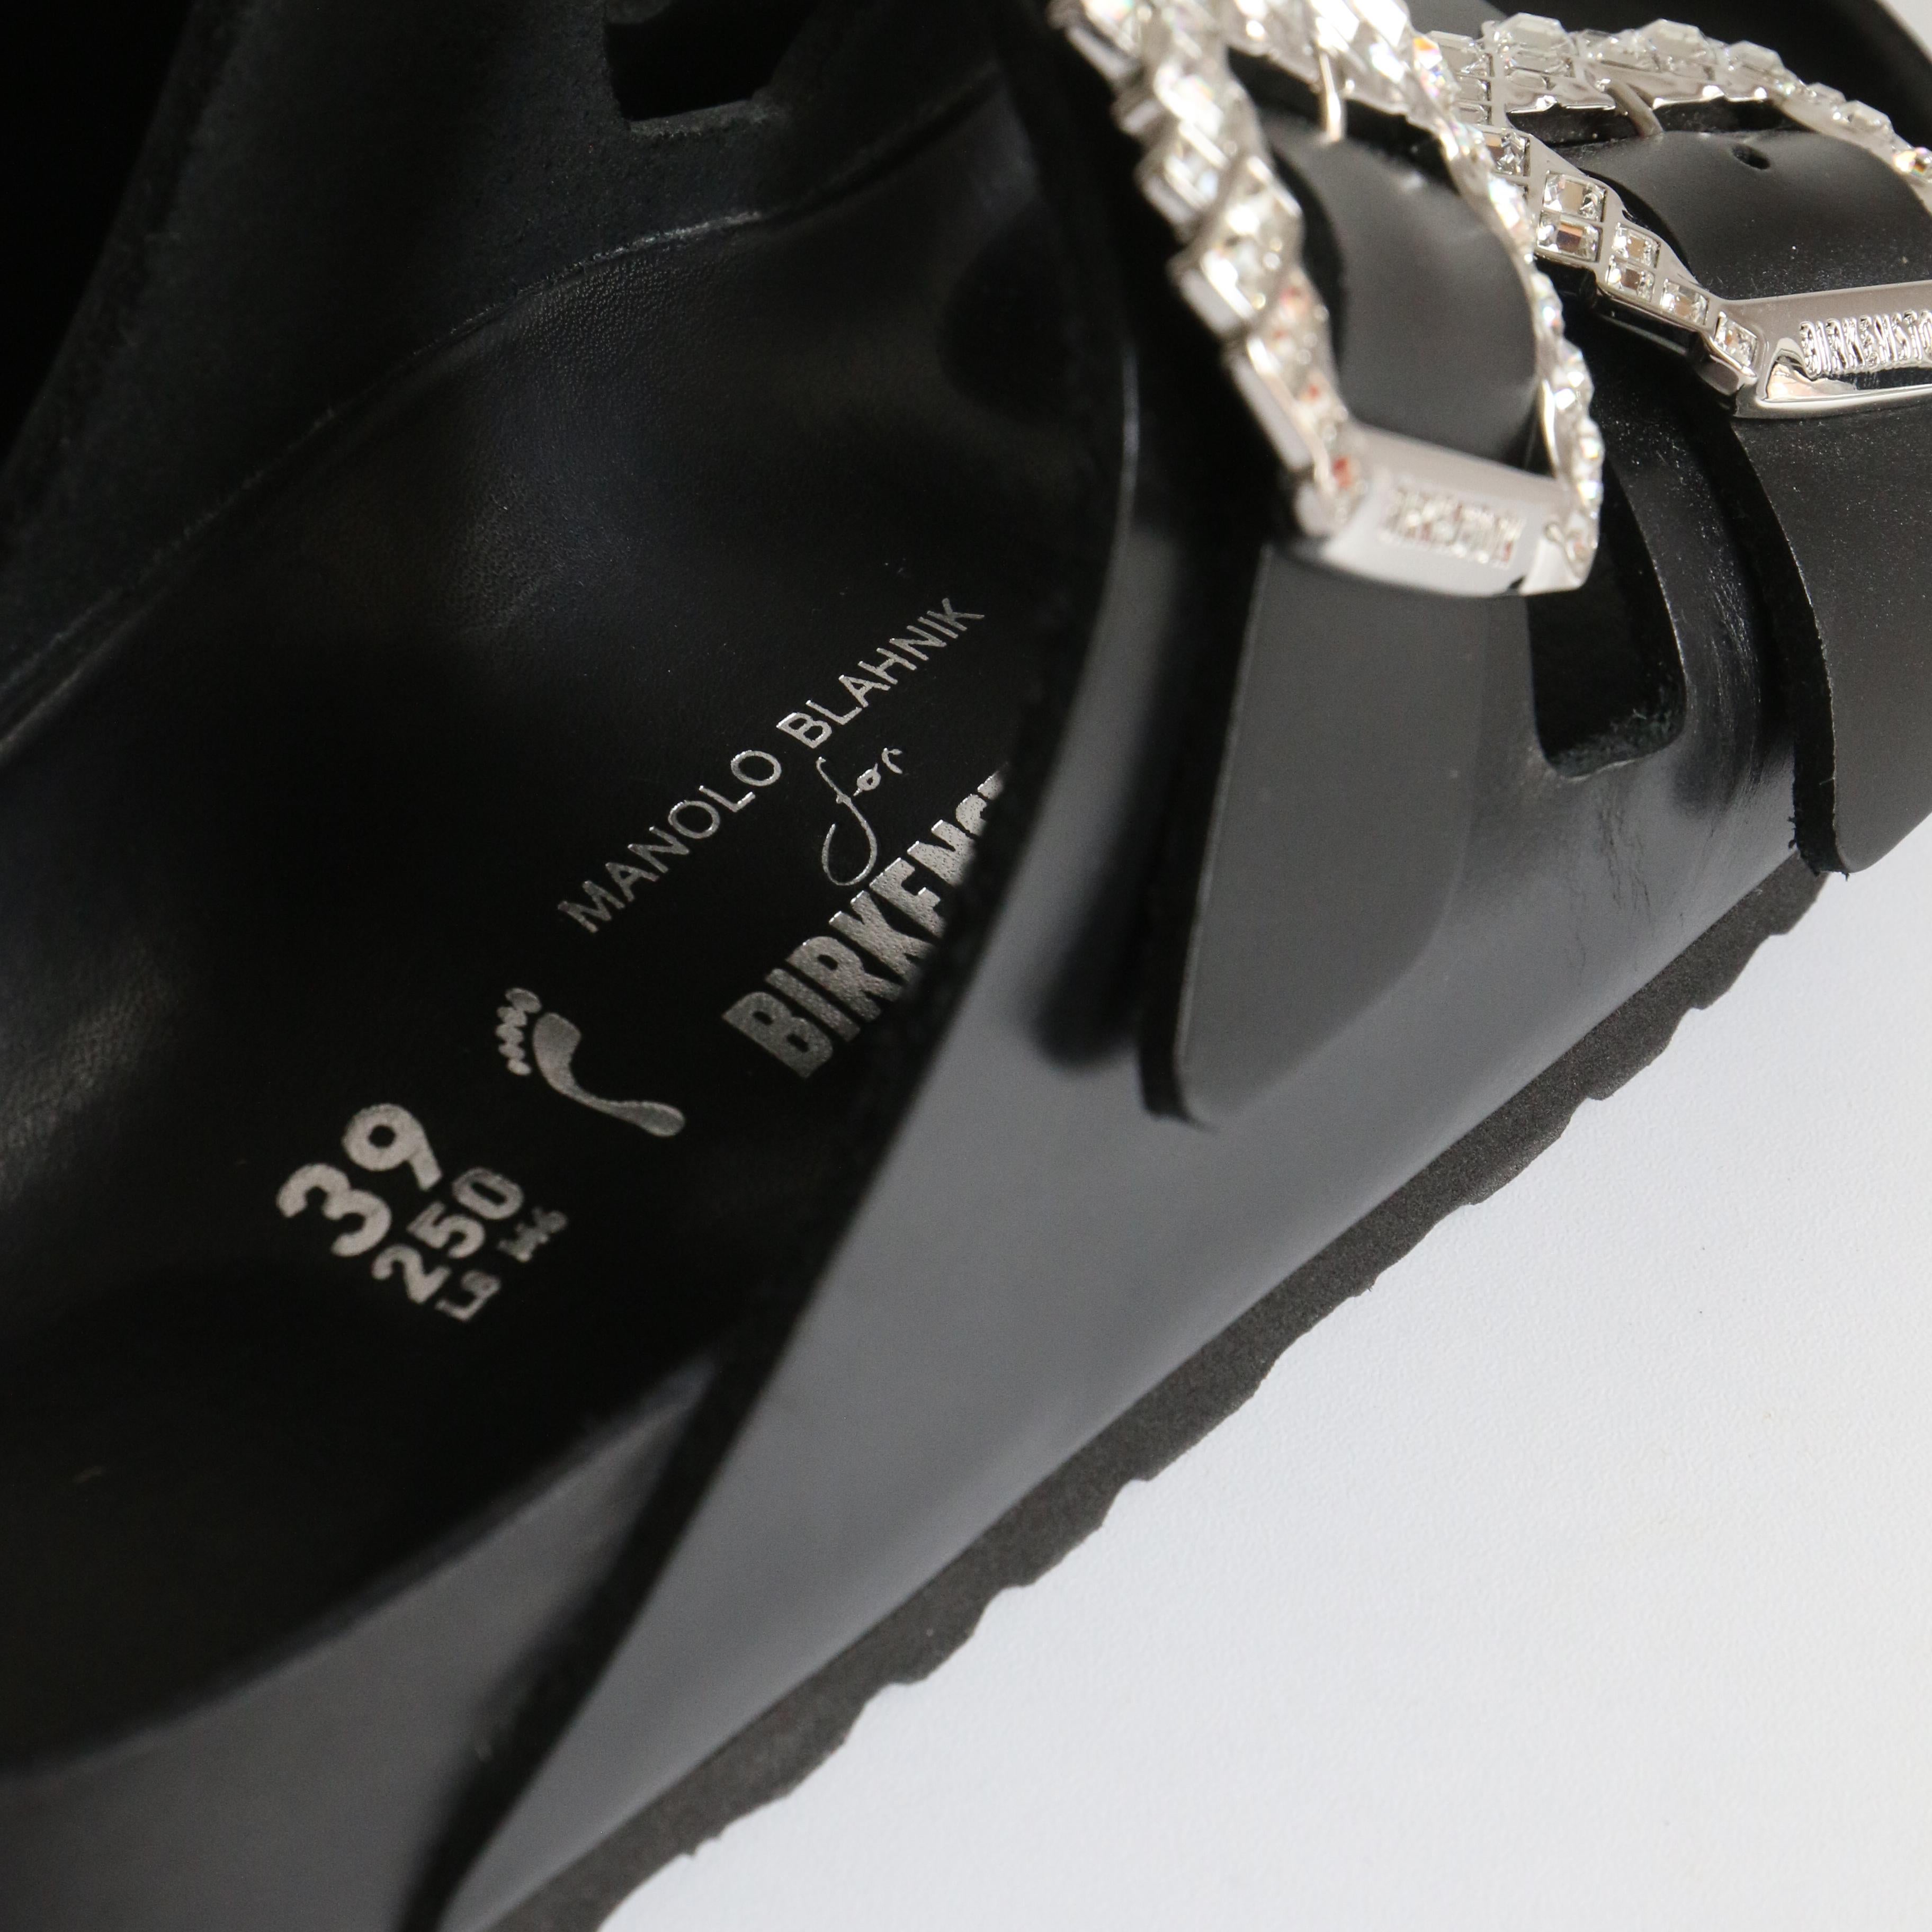  Black Leather & Rhinestone Manolo Blahnik For Birkenstock Sandals UK 6 US 8 EU  2